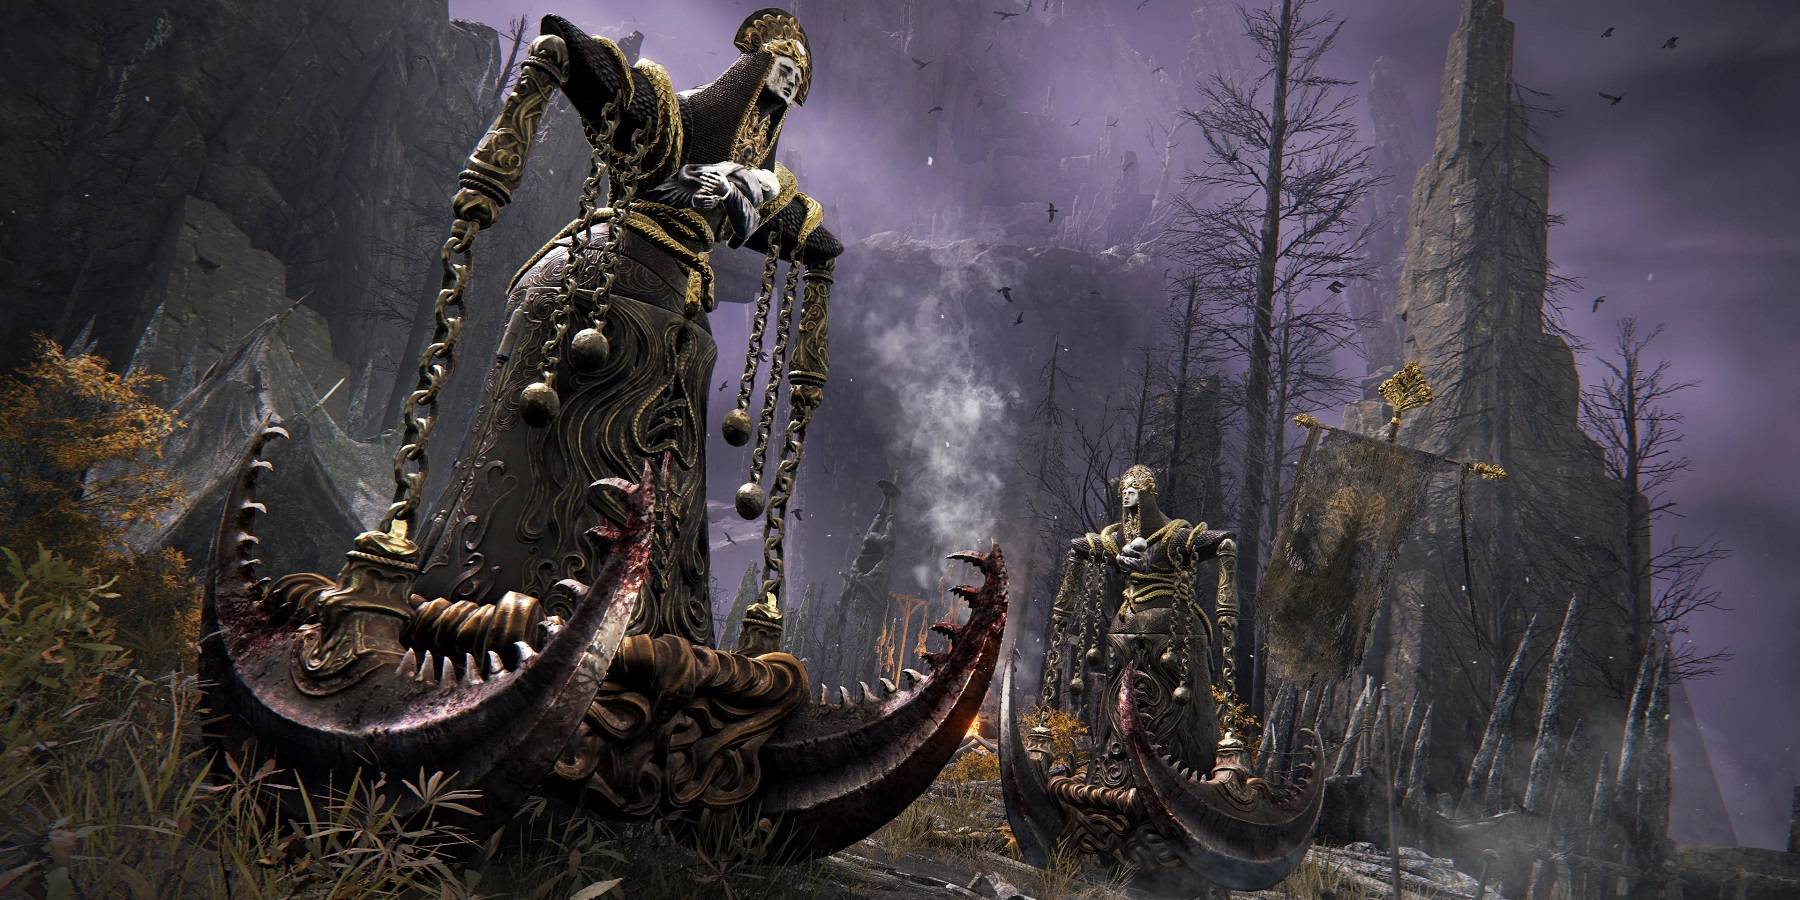 New Elden Ring Screenshots Show Dragon, Giant Skeleton on Throne